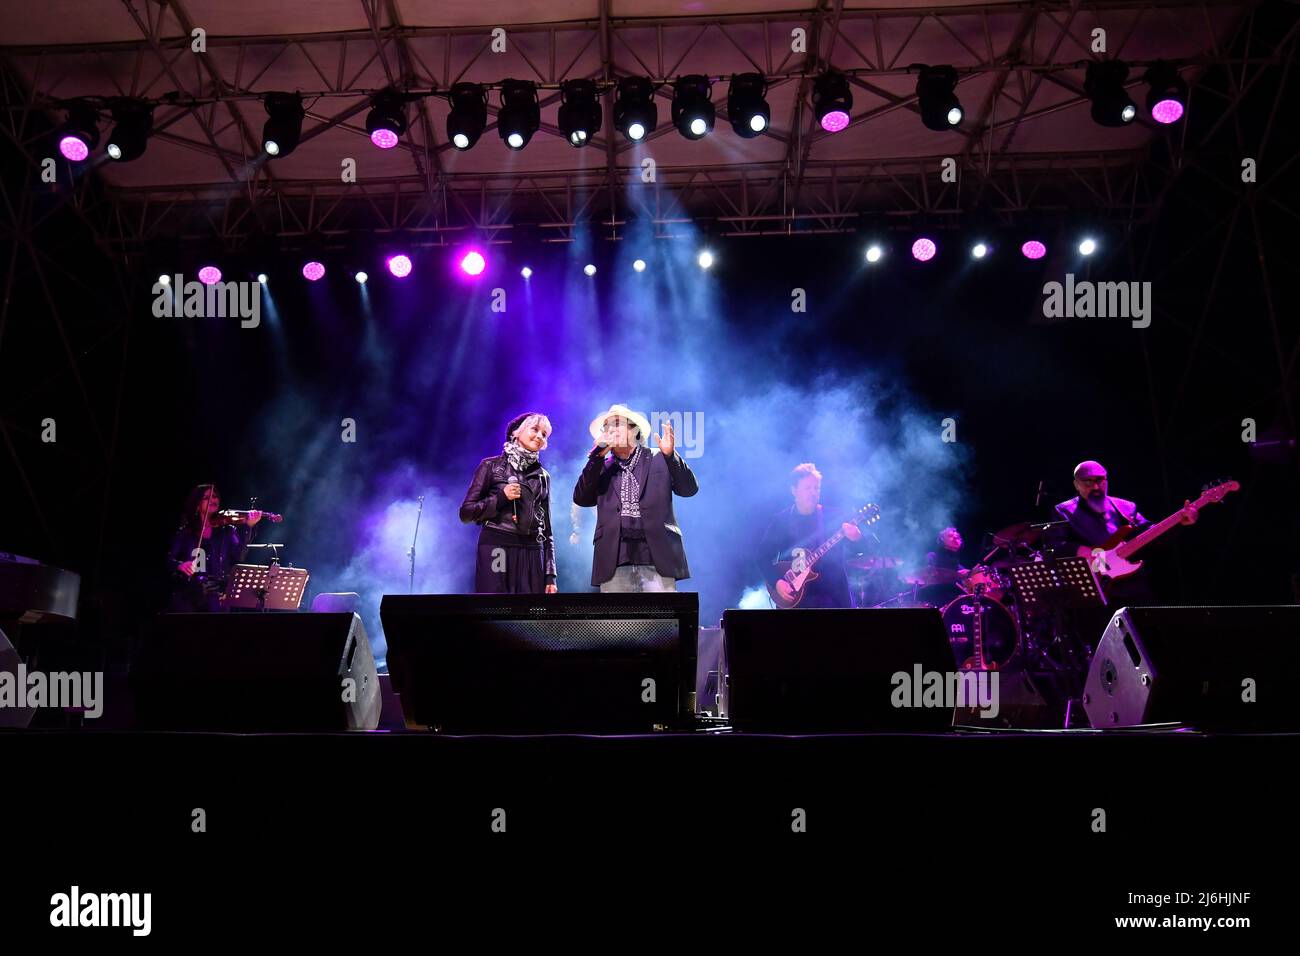 Al Bano Carrisi in concert Stock Photo